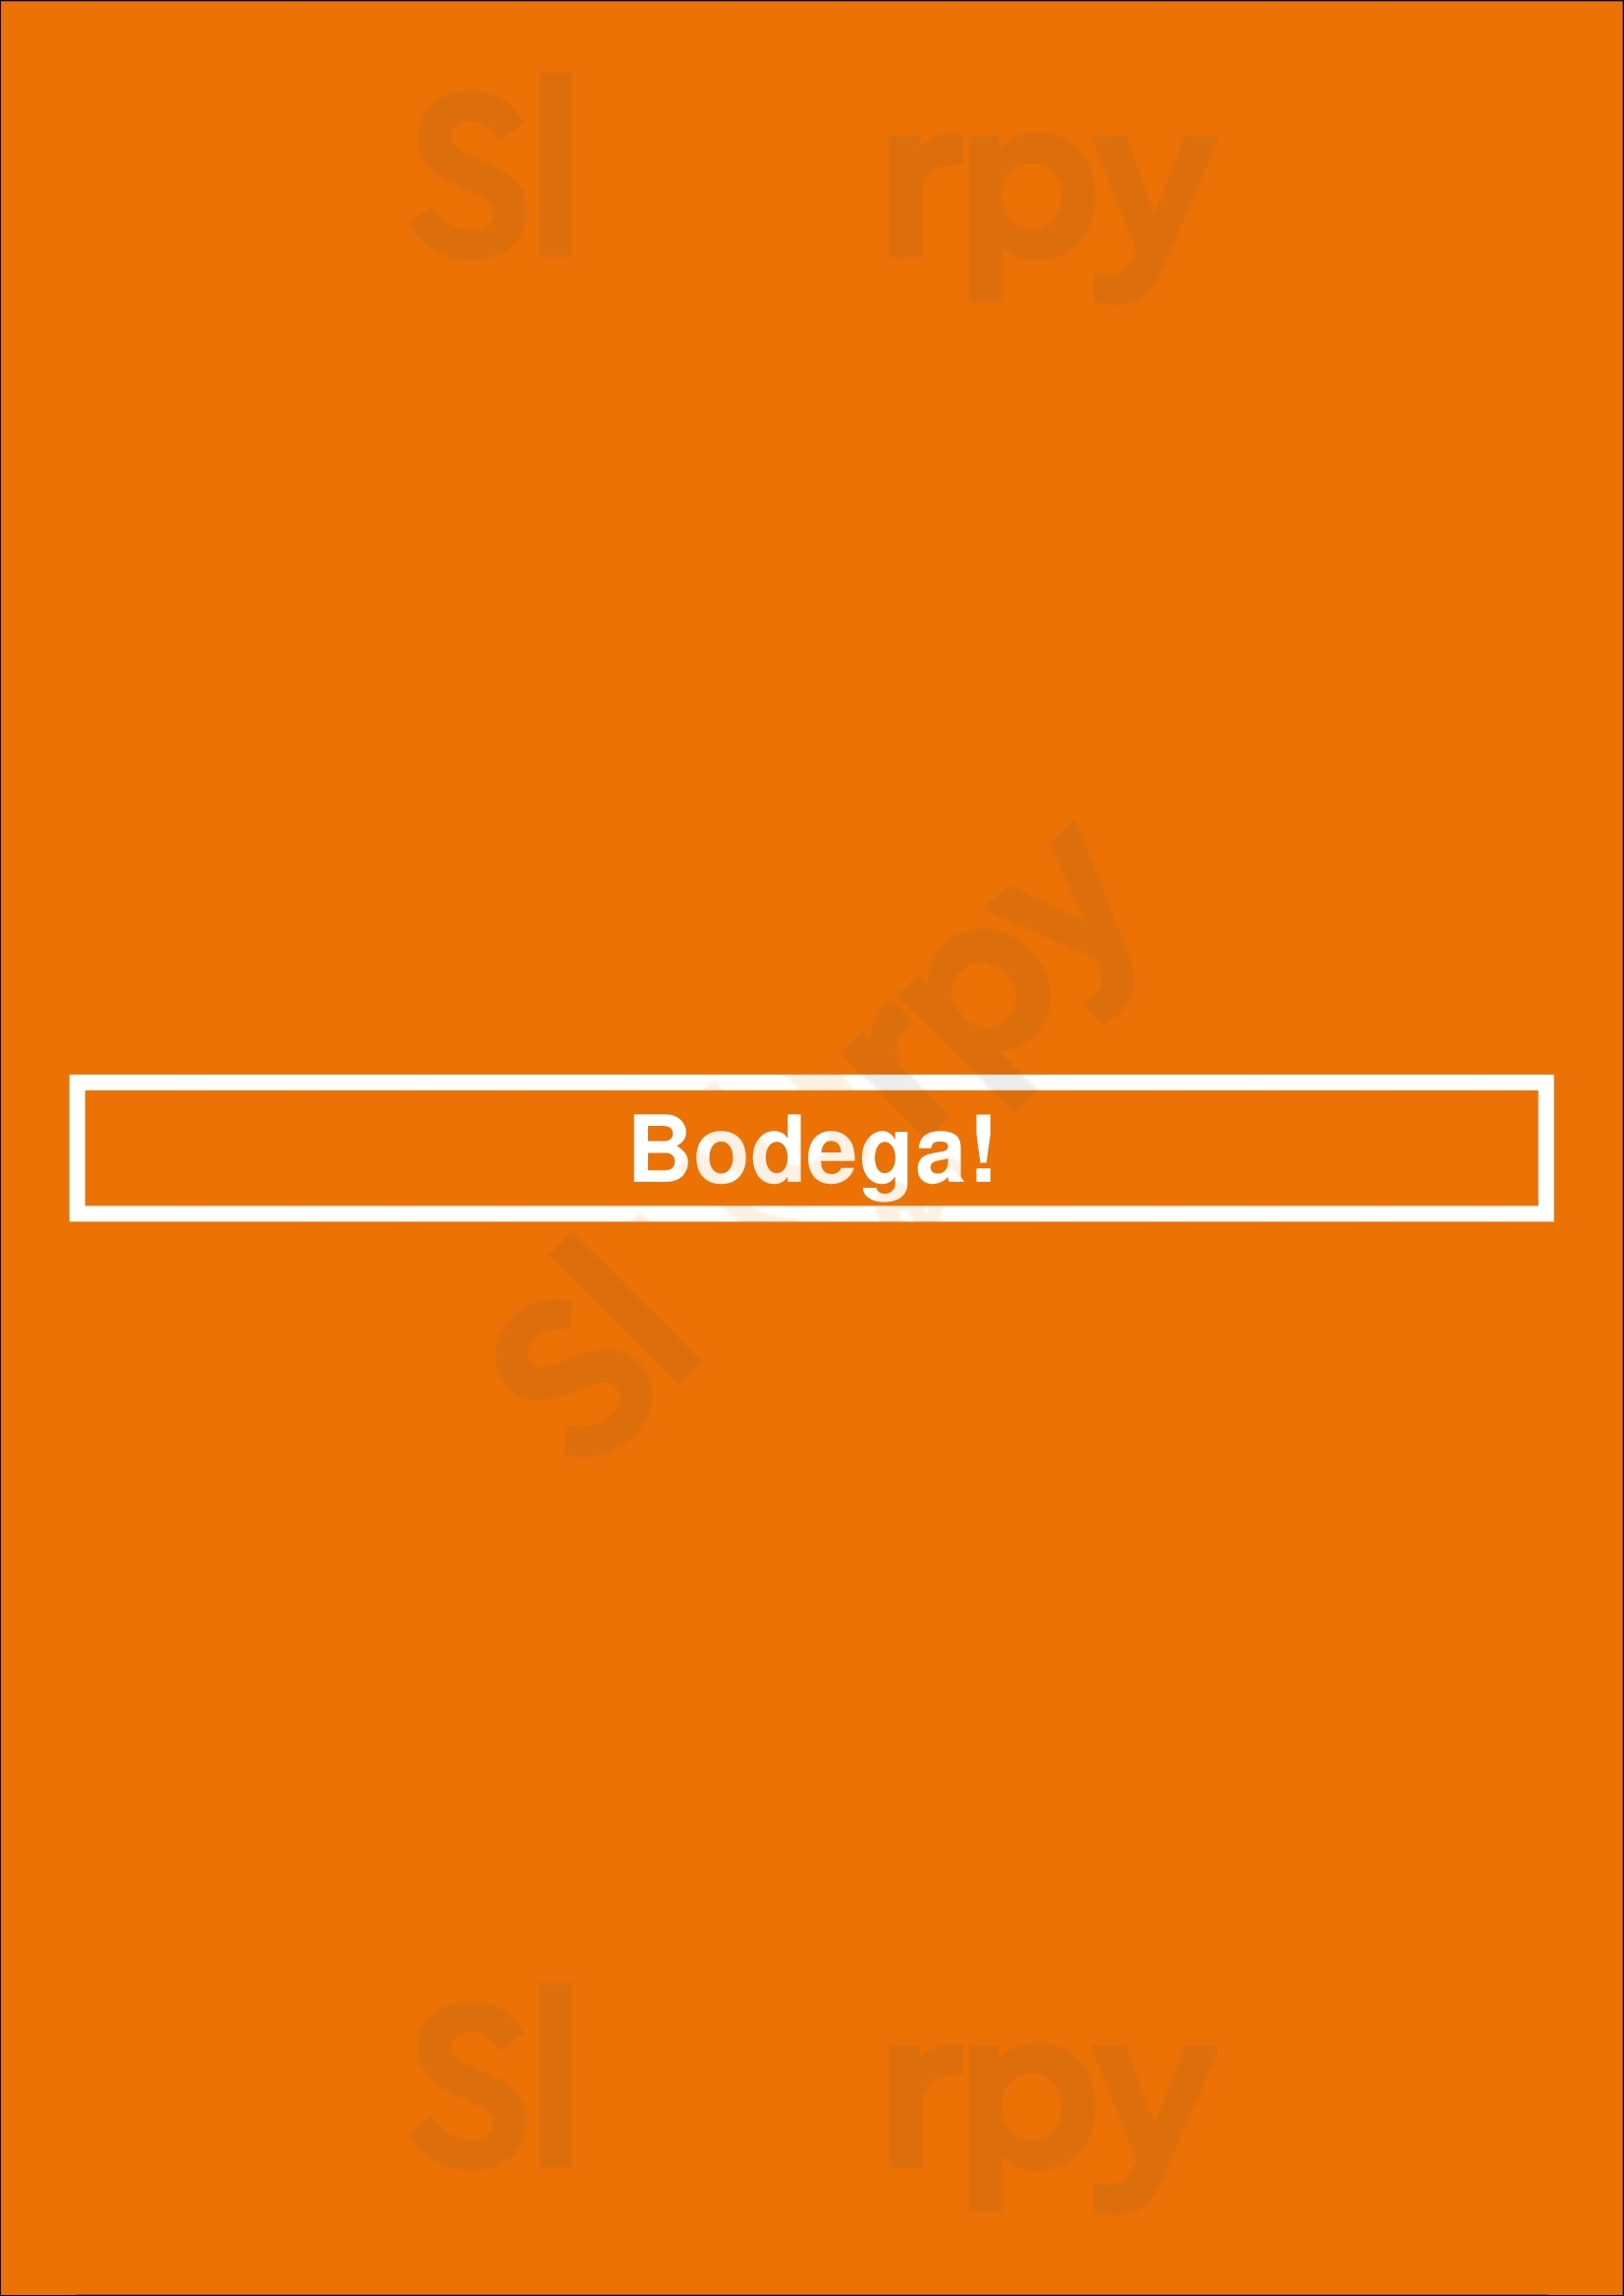 Bodega! Waterford Menu - 1